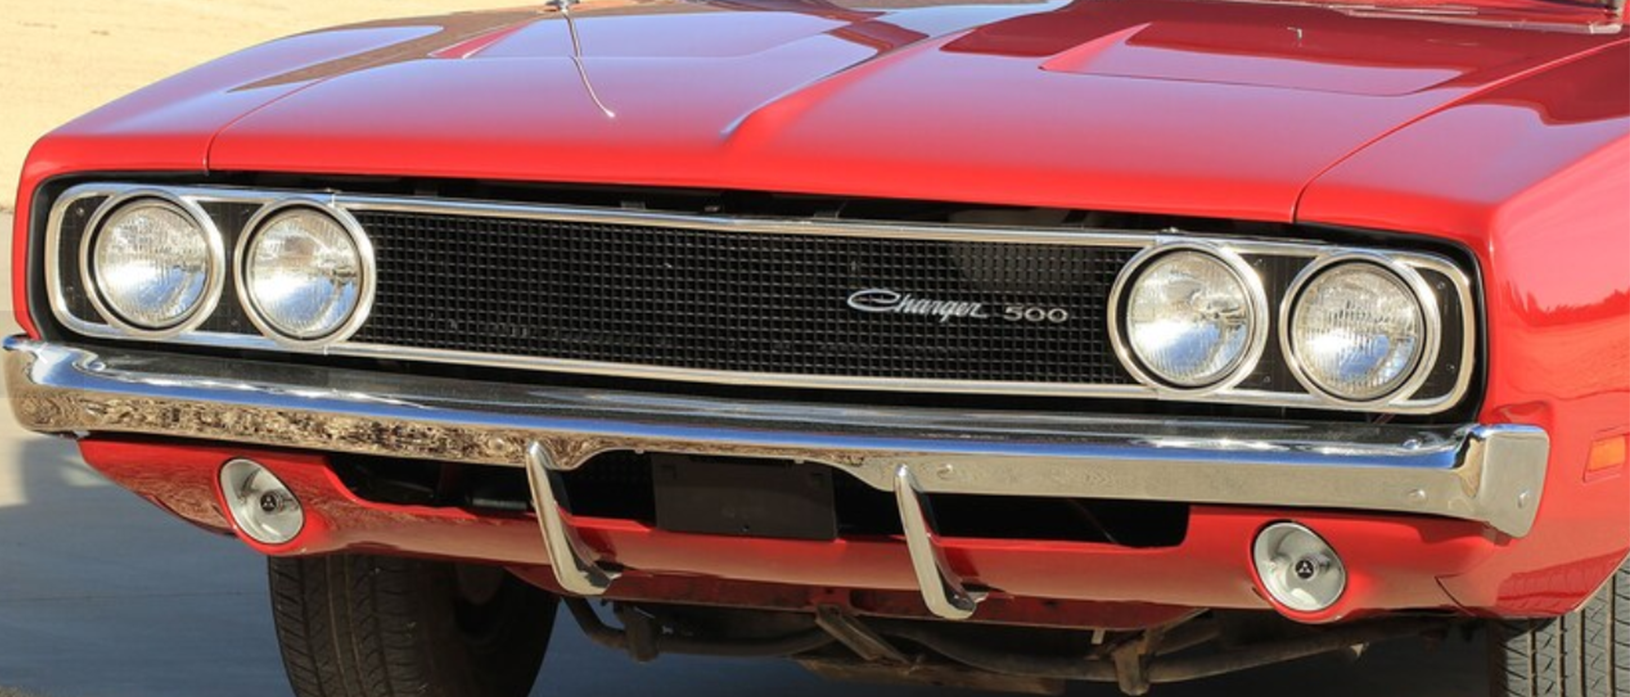 1969 Dodge Charger 500: Rare Find and Restoration